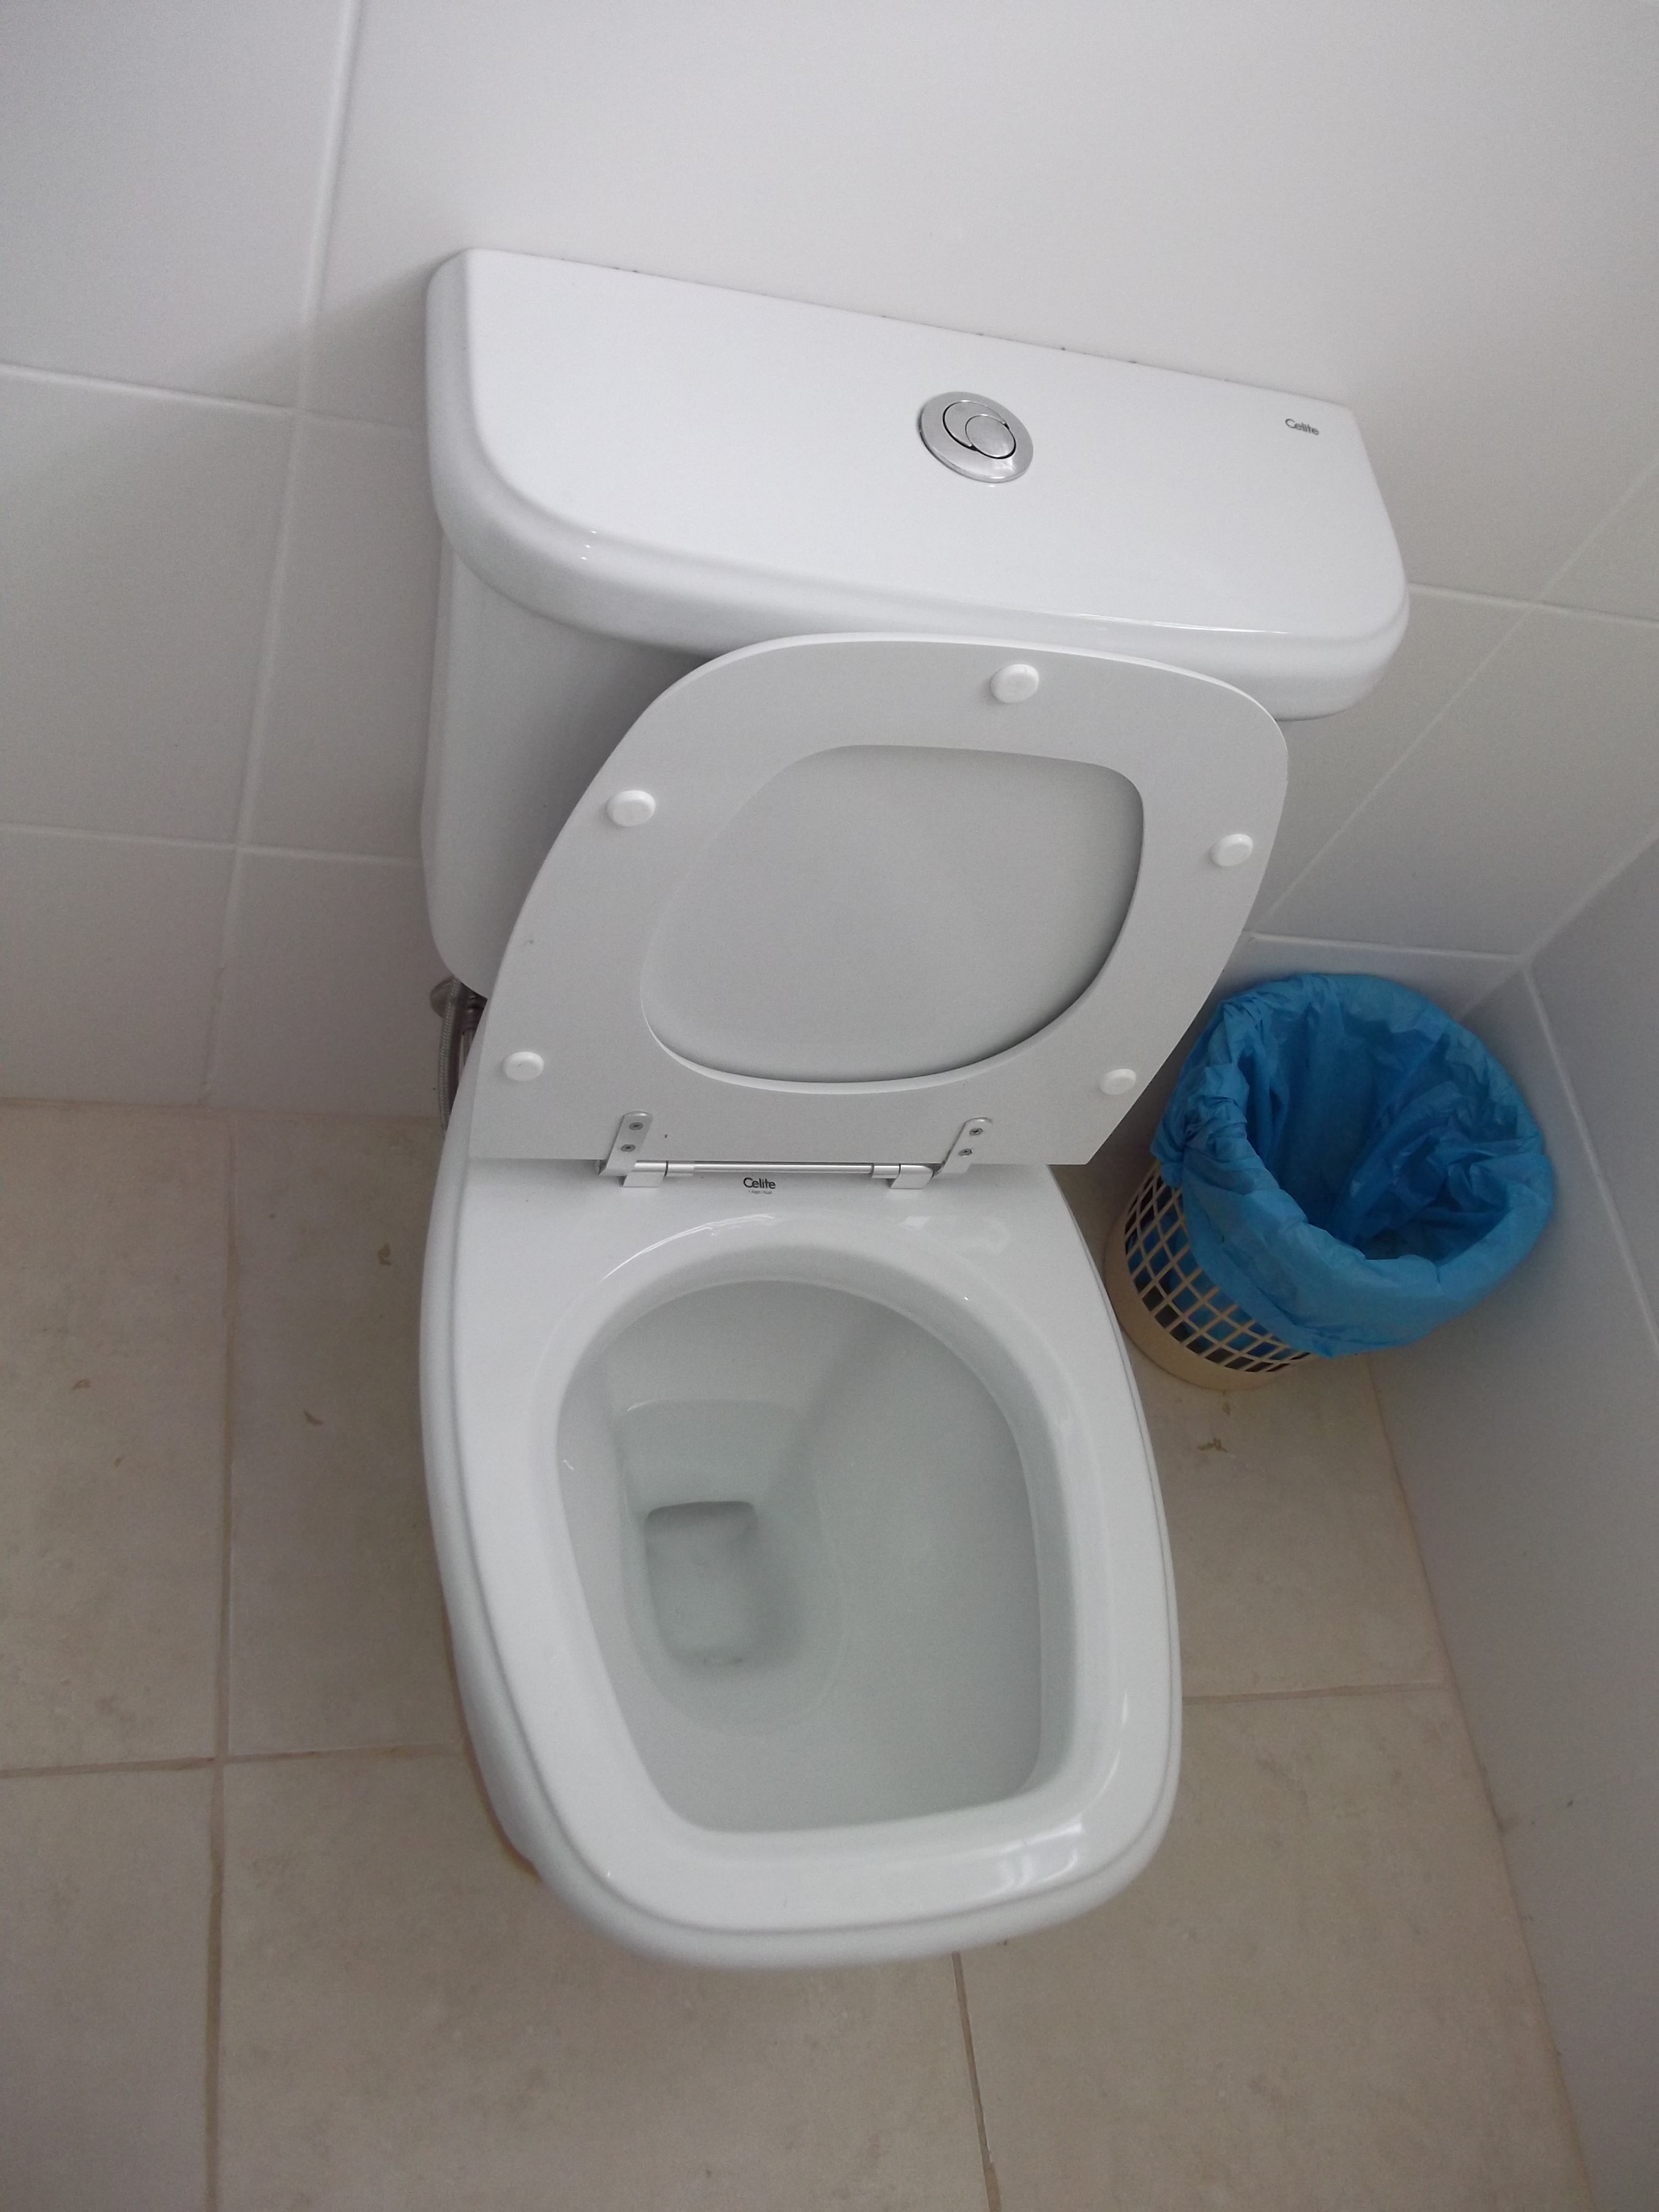 Details about   UK Standard G1/2 Toilet Push Button Fill Valve Adjustable Length ABS Bathroom 